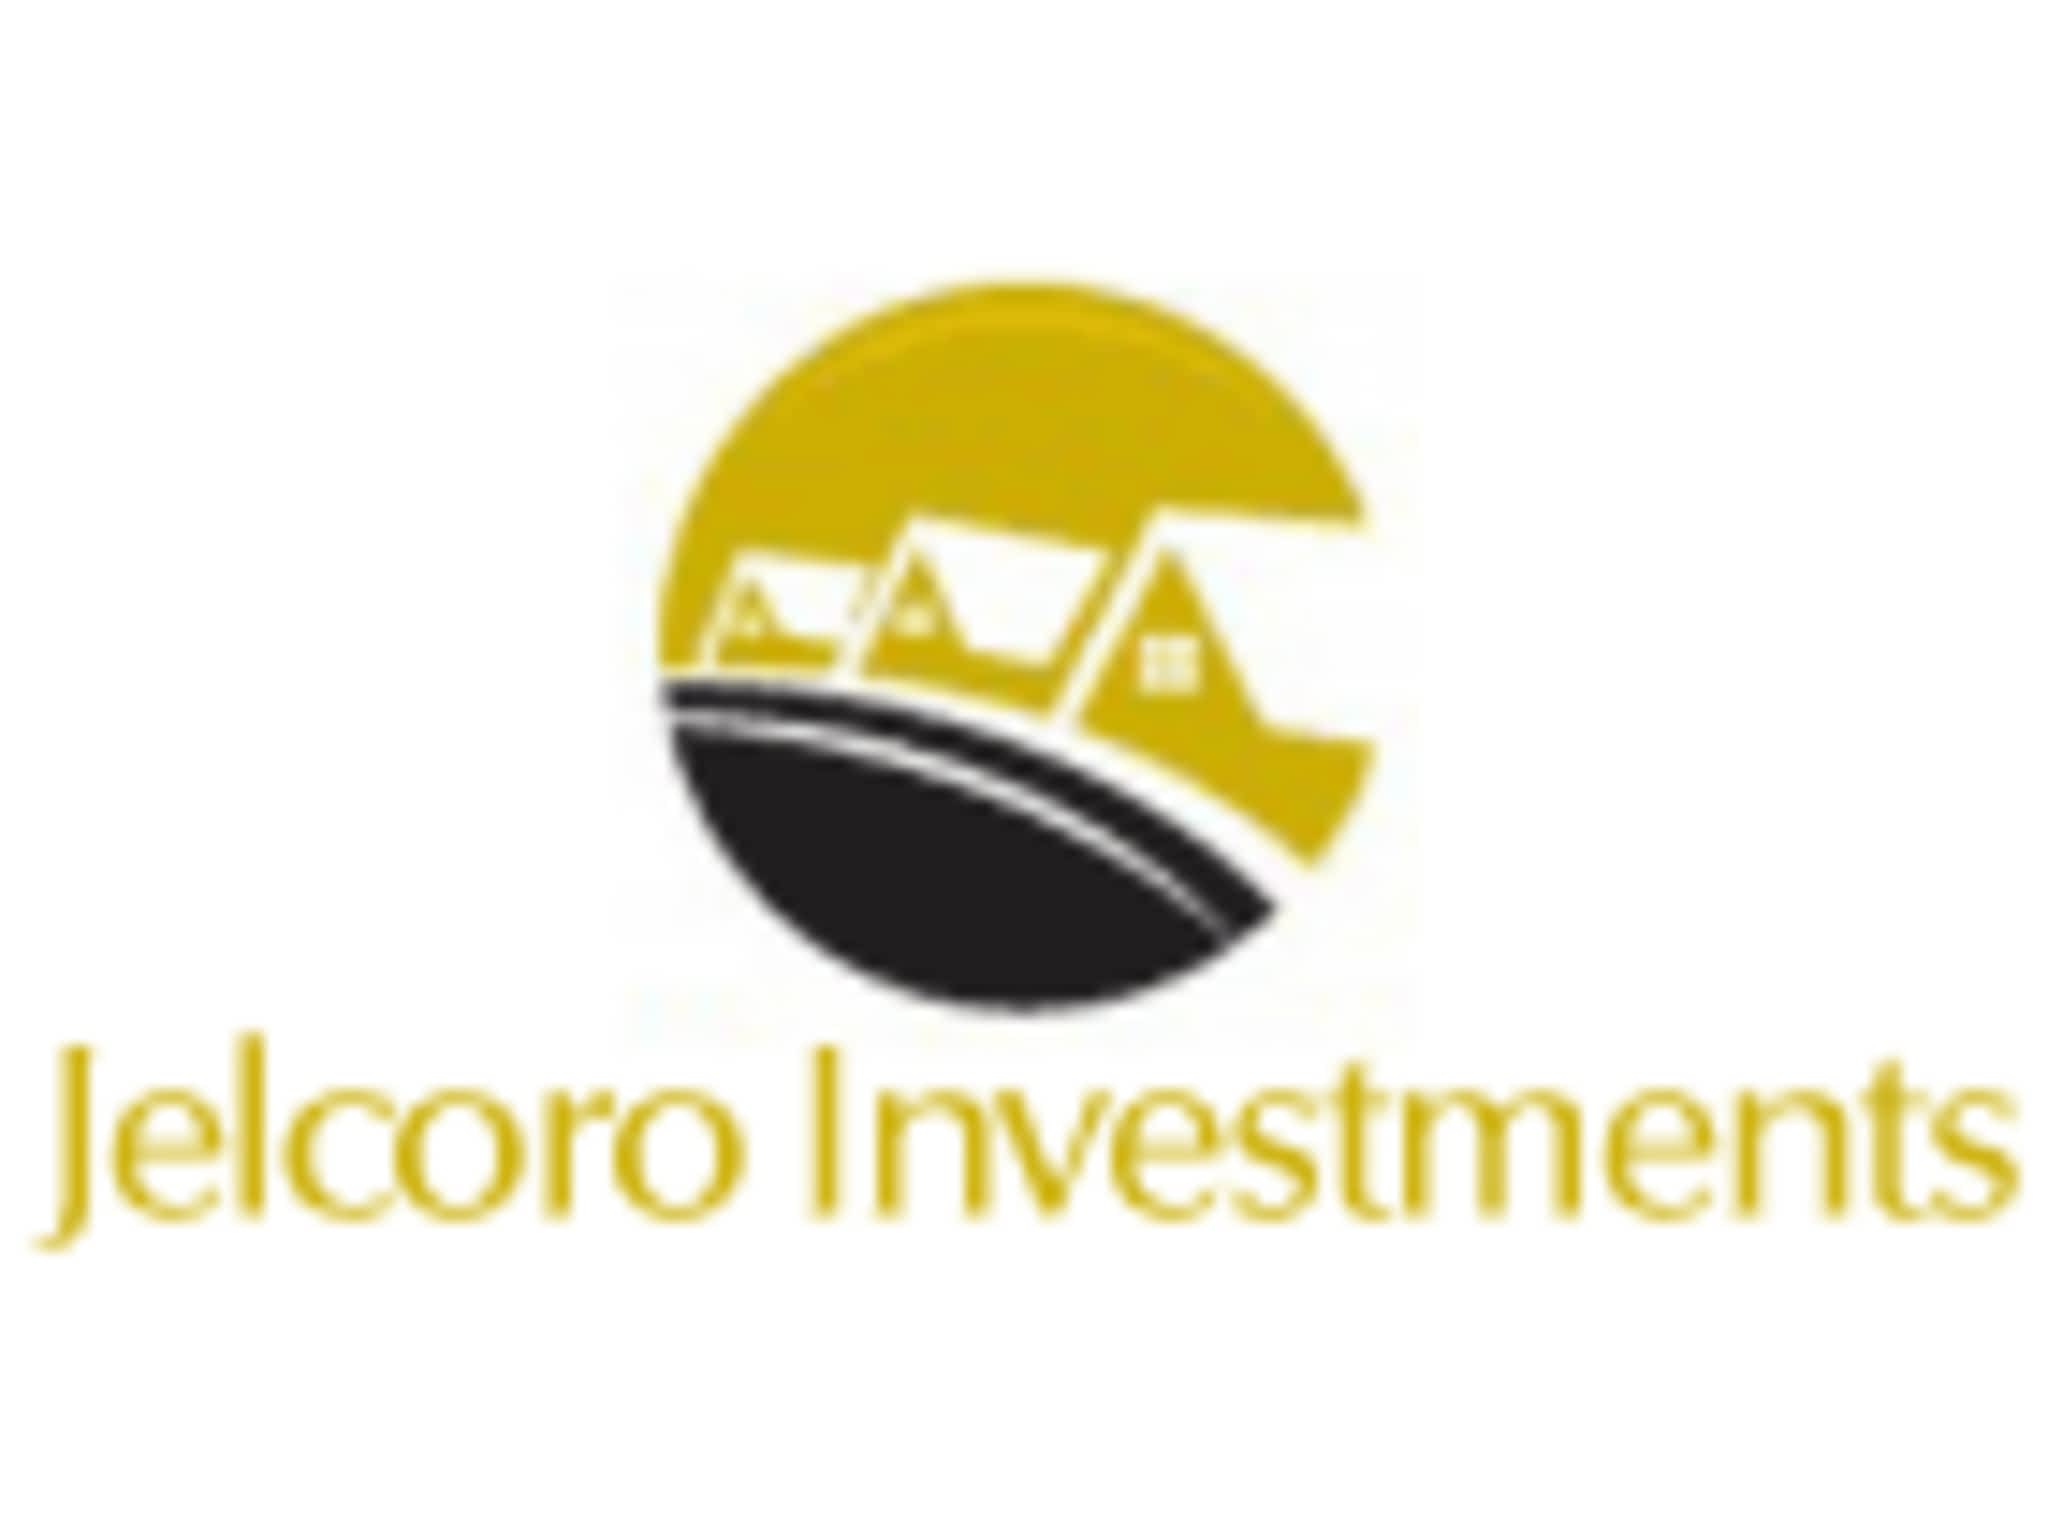 photo Jelcoro Investments